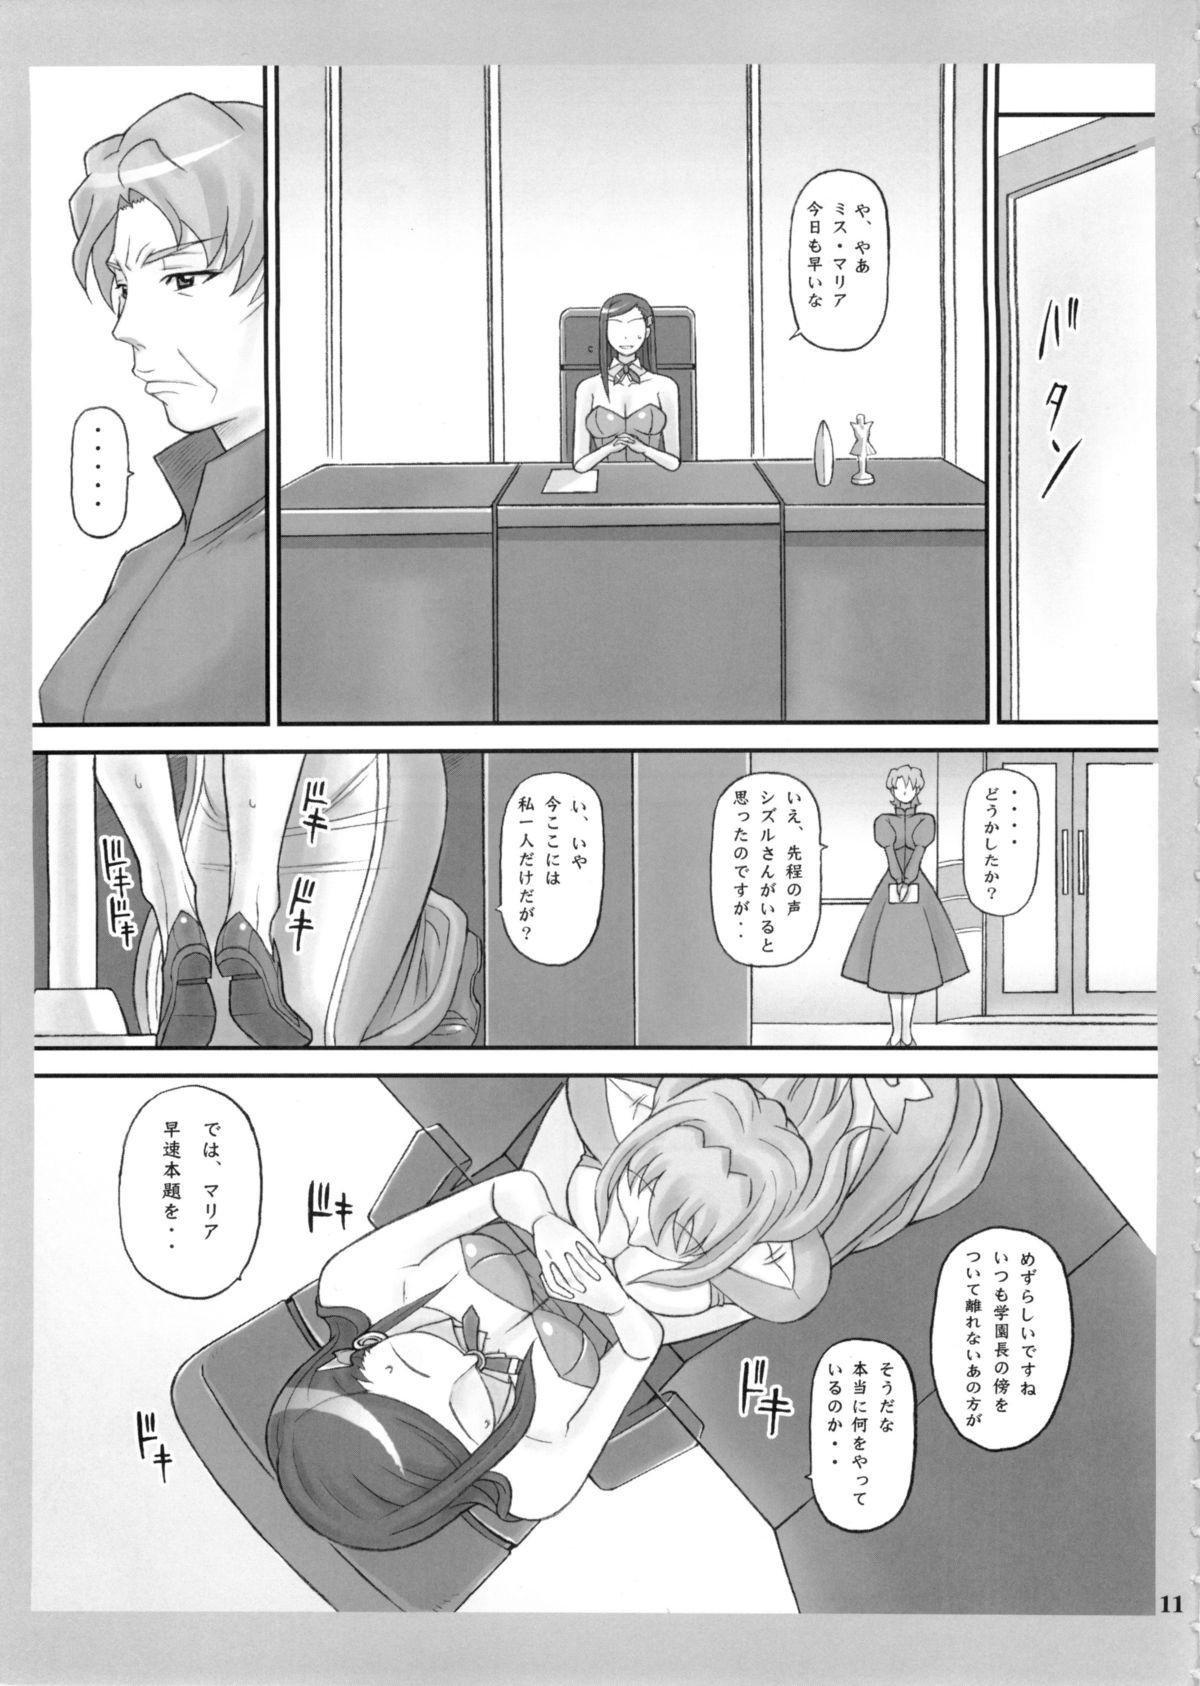 Long Natsukuru - Mai-otome Sixtynine - Page 11